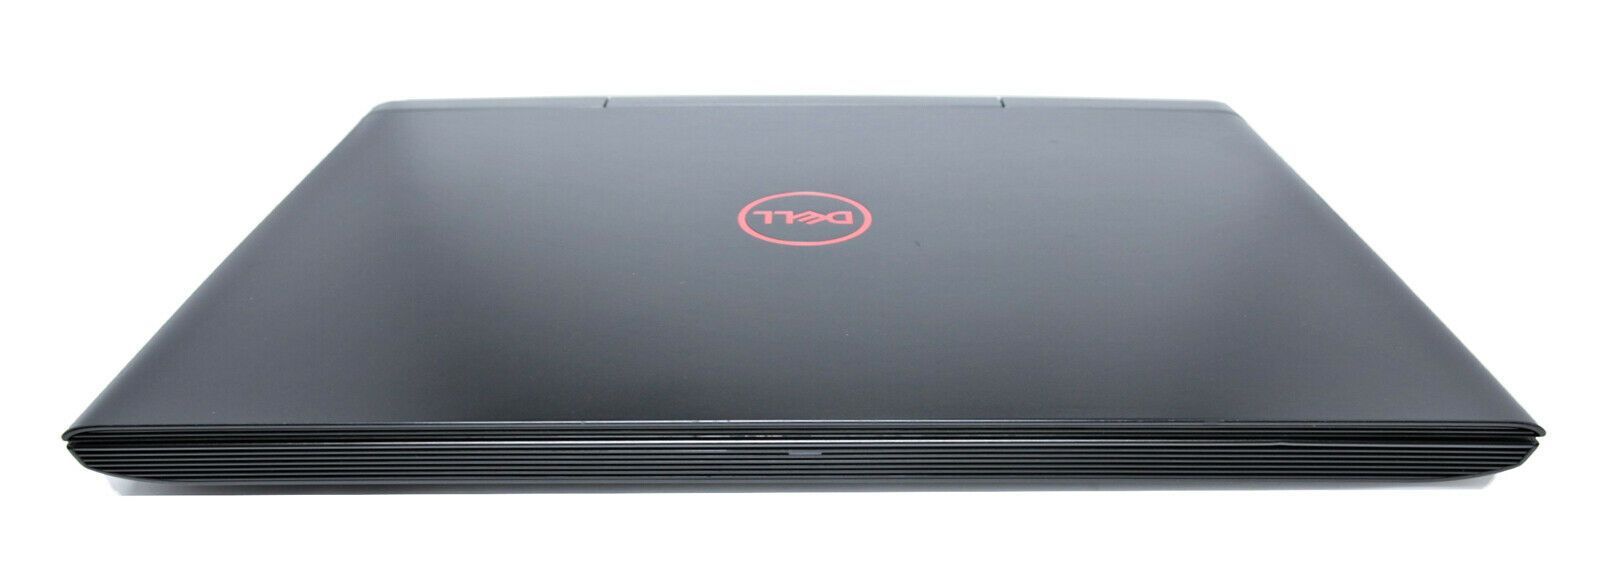 Dell 15 7577 IPS Gaming Laptop: GTX 1060 Max-Q, 256GB+ HDD, 16GB RAM - CruiseTech